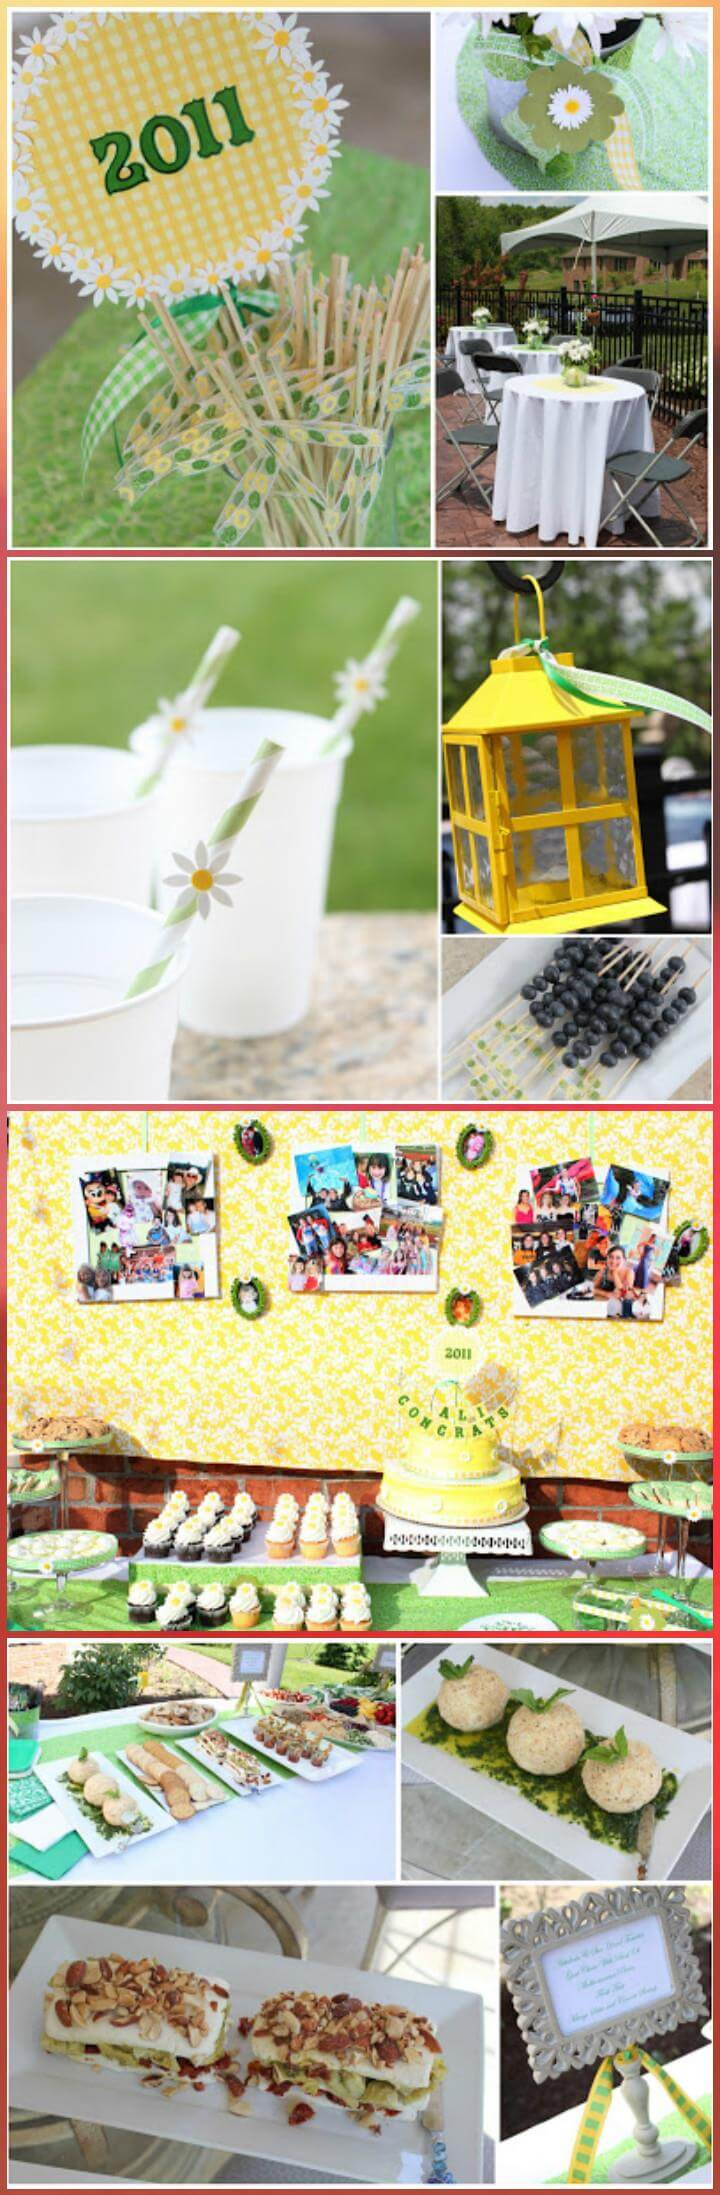 Crafty Graduation Party Ideas
 50 DIY Graduation Party Decorations & Themes ⋆ DIY Crafts